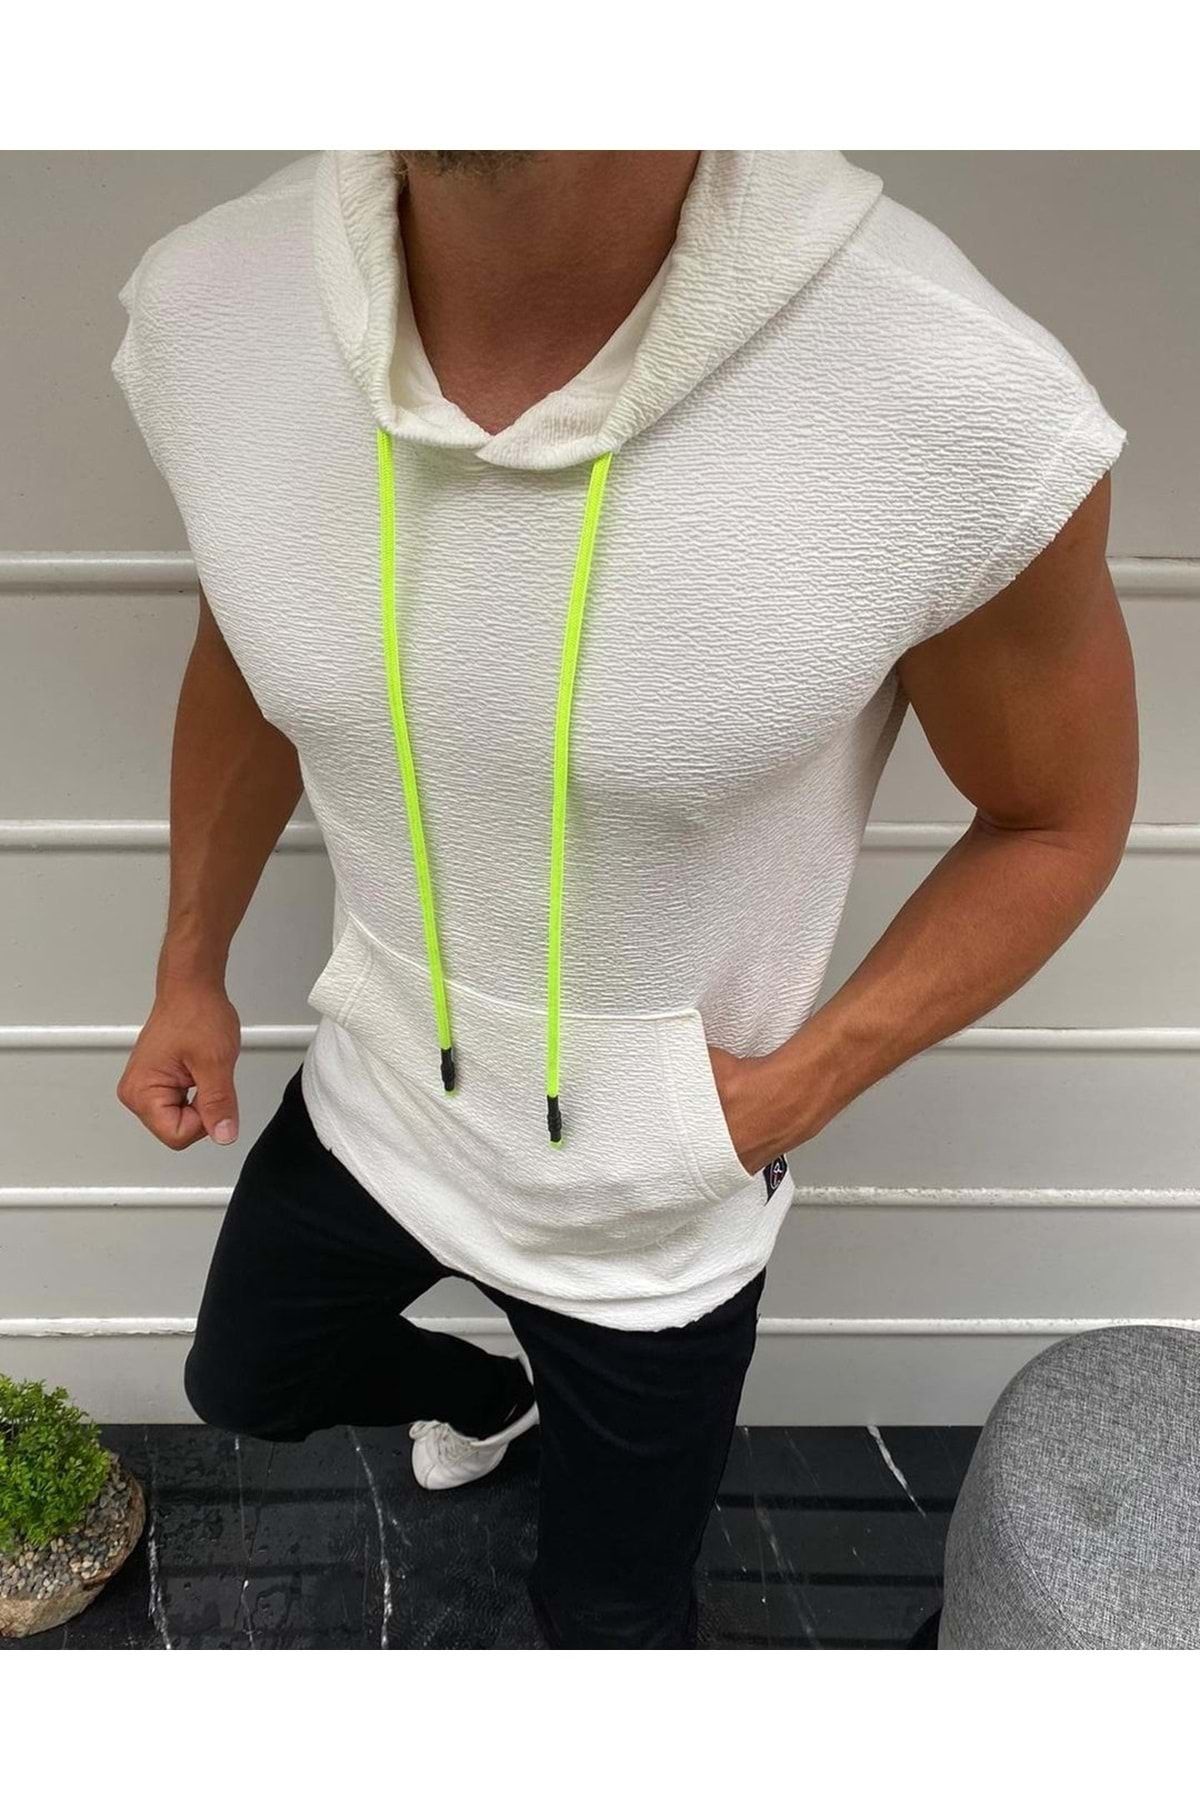 rocqerx erkek ekru sifir kol kapsonlu spor t shirt fiyati yorumlari trendyol